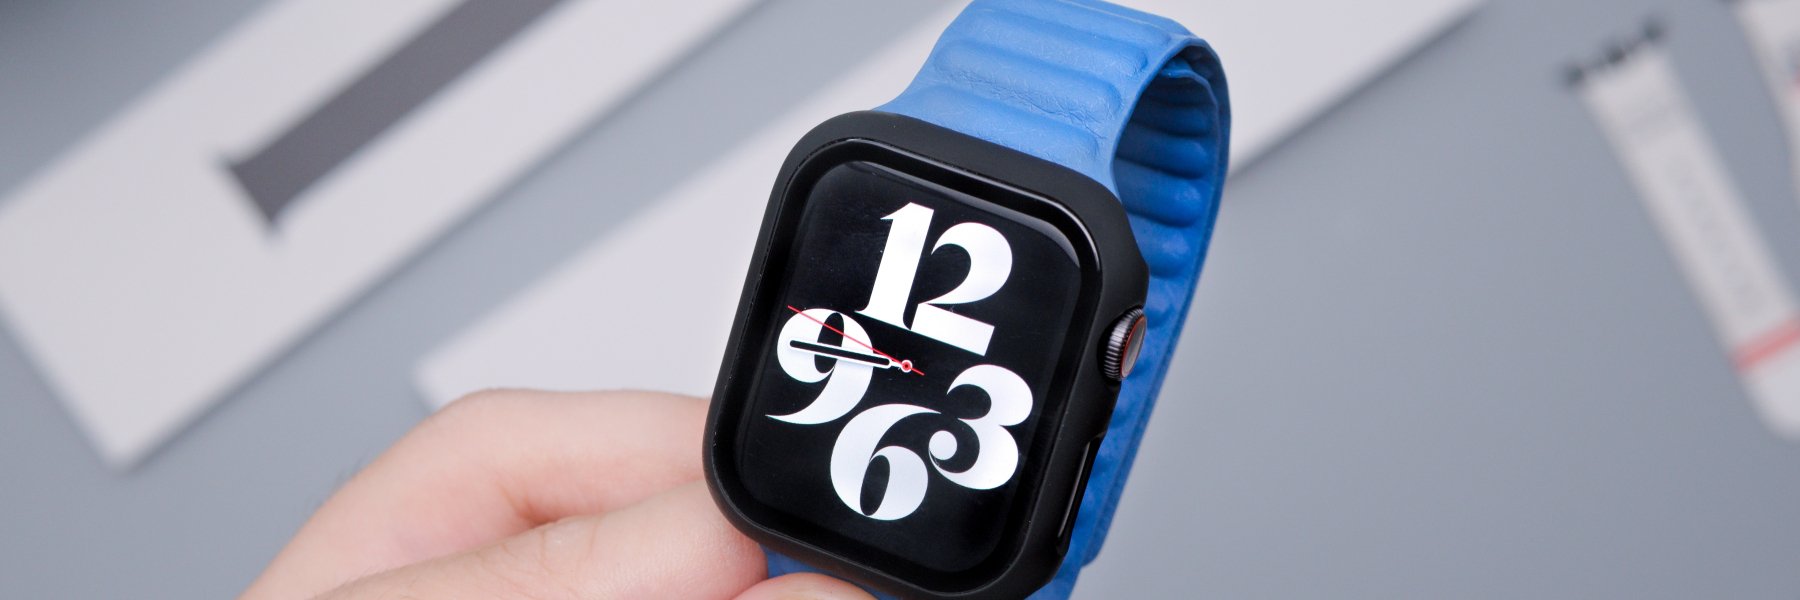 Smartwatch mit blauem Armband